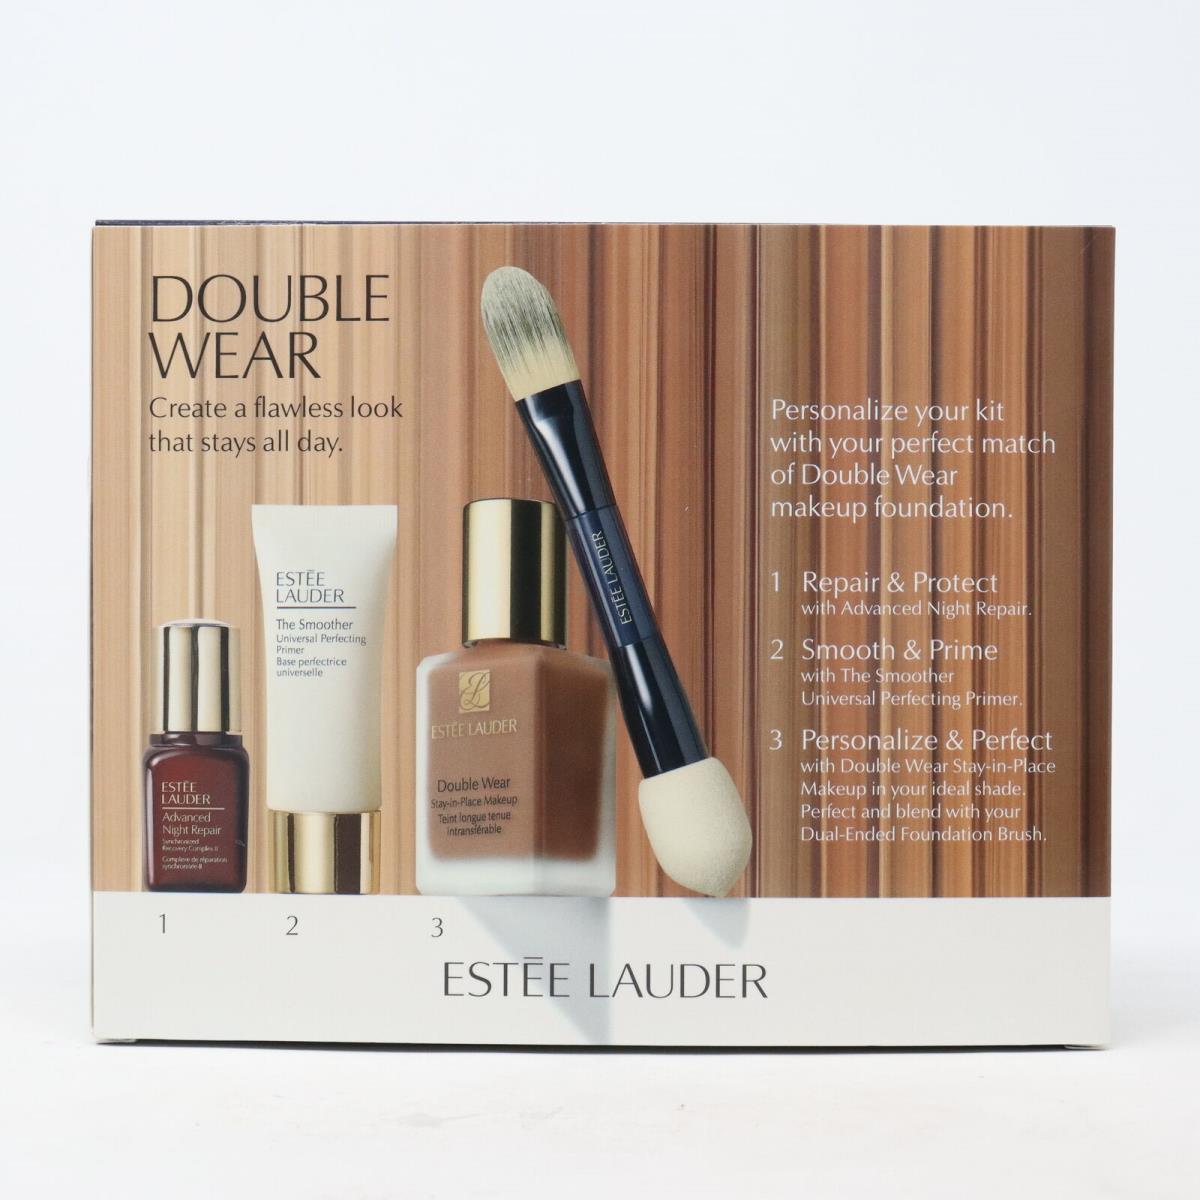 Estee Lauder Meet Your Match Double Wear Makeup Kit /